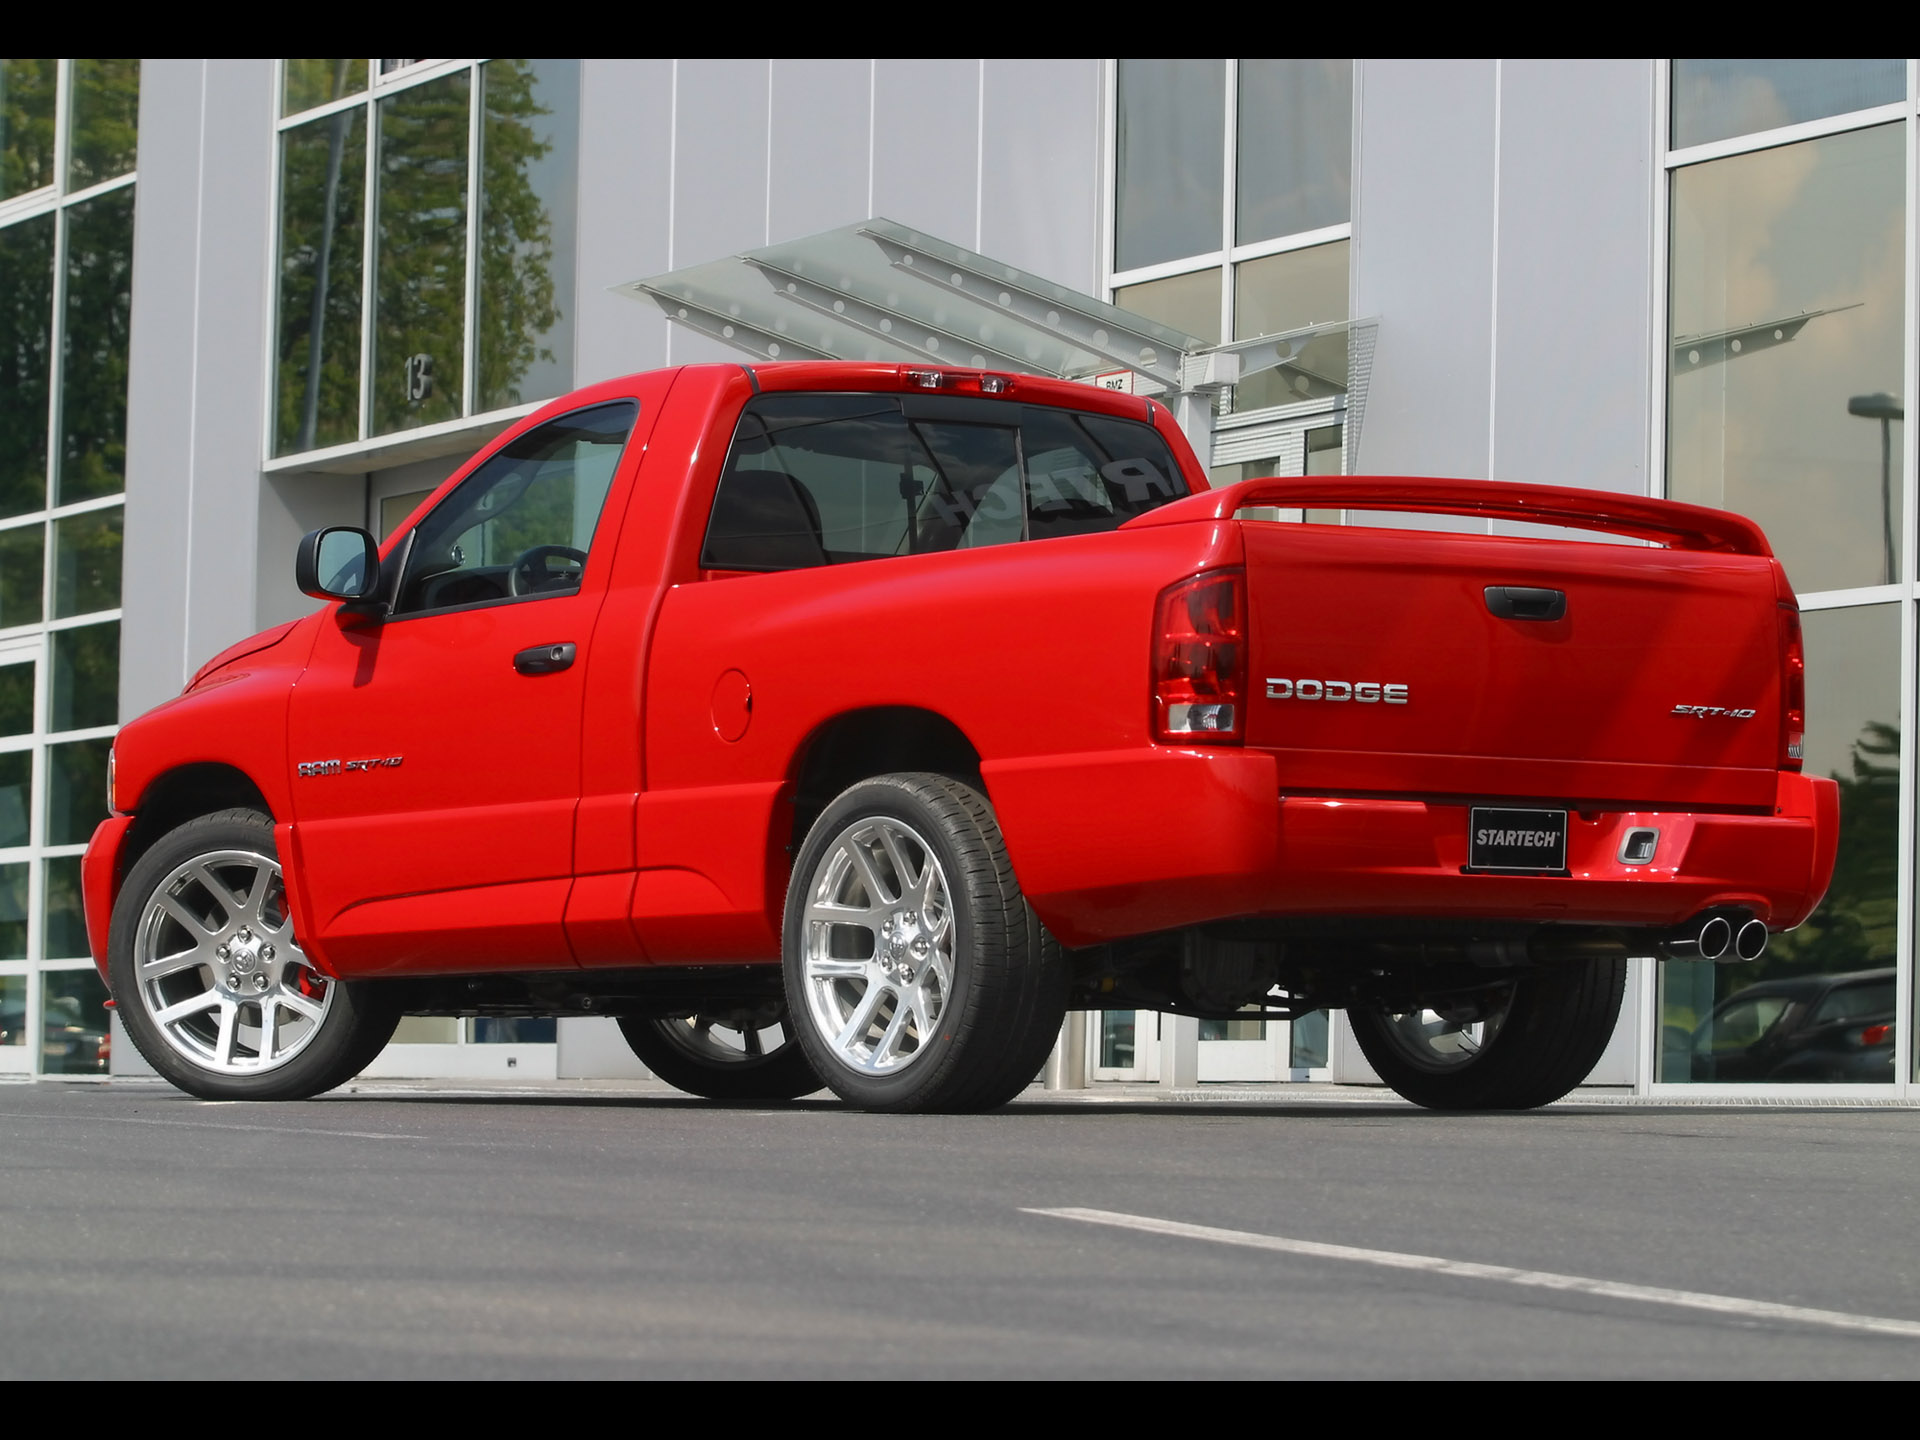 2005, Startech, Dodge, Ram, Pickup, Truck, Tuning, Muscle Wallpaper